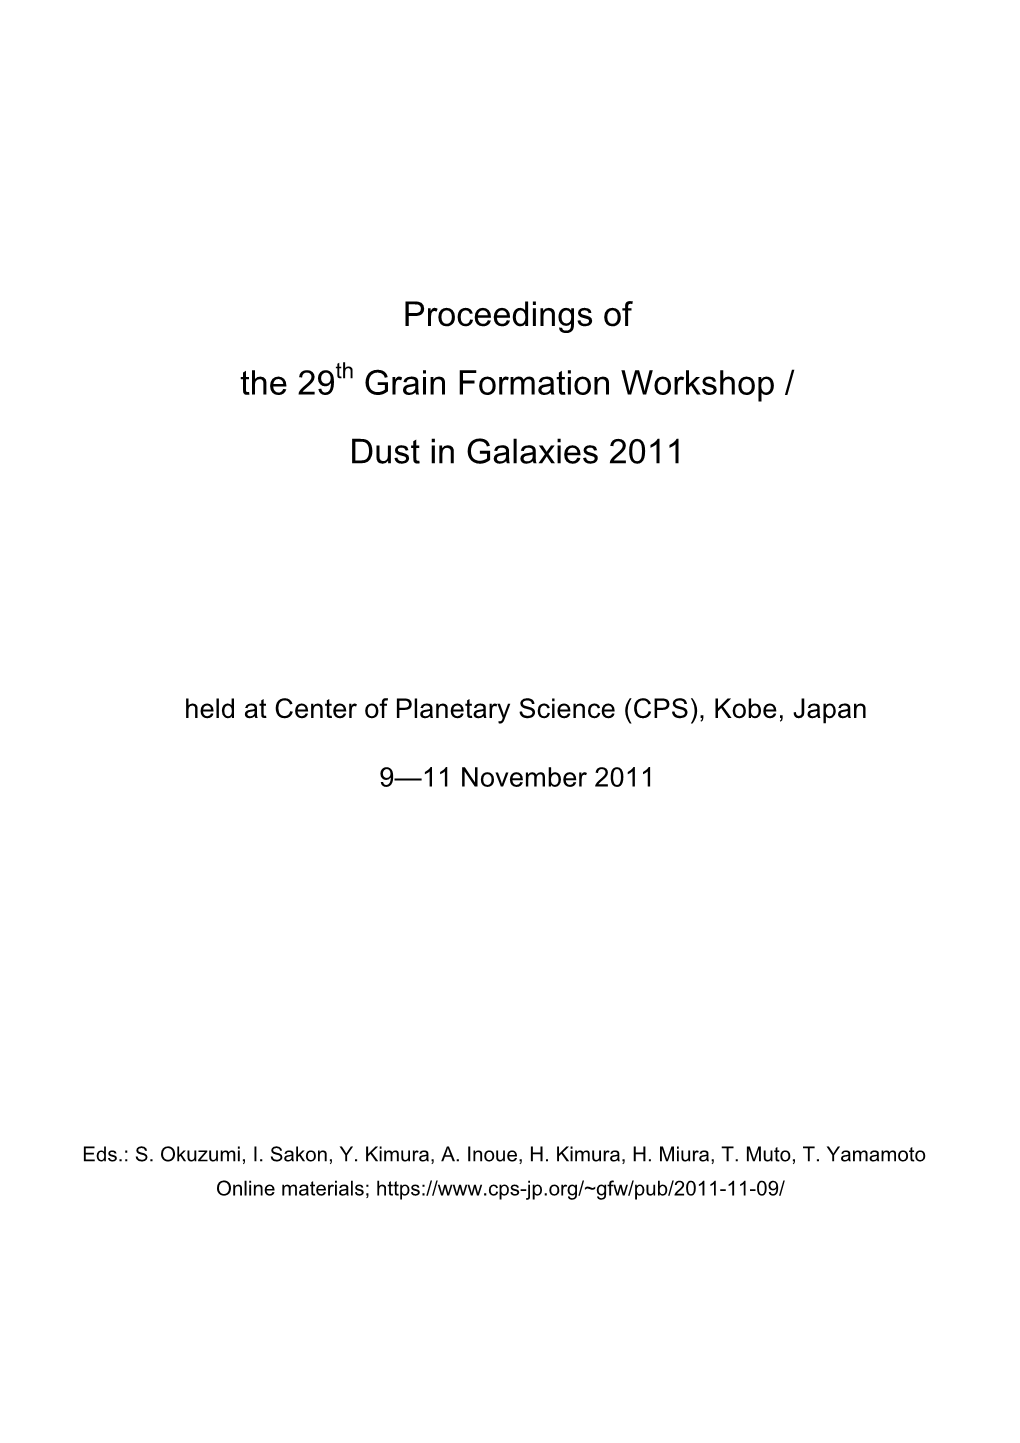 Proceedings of the 29 Grain Formation Workshop / Dust In